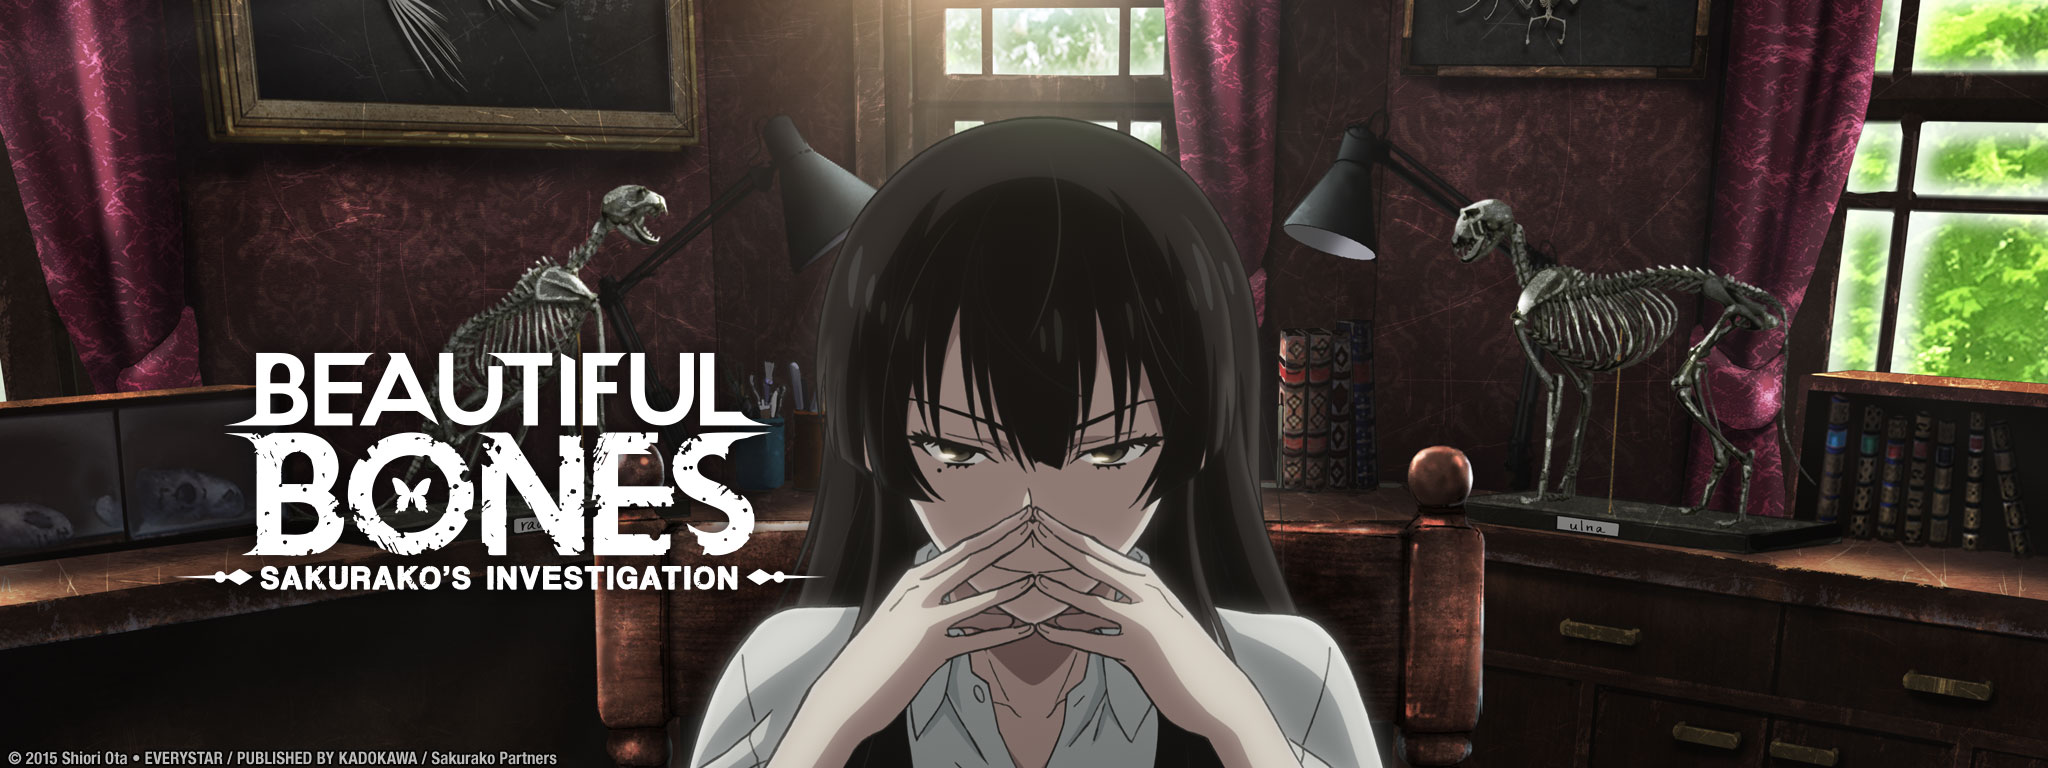 Title Art for Beautiful Bones -Sakurako's Investigation-